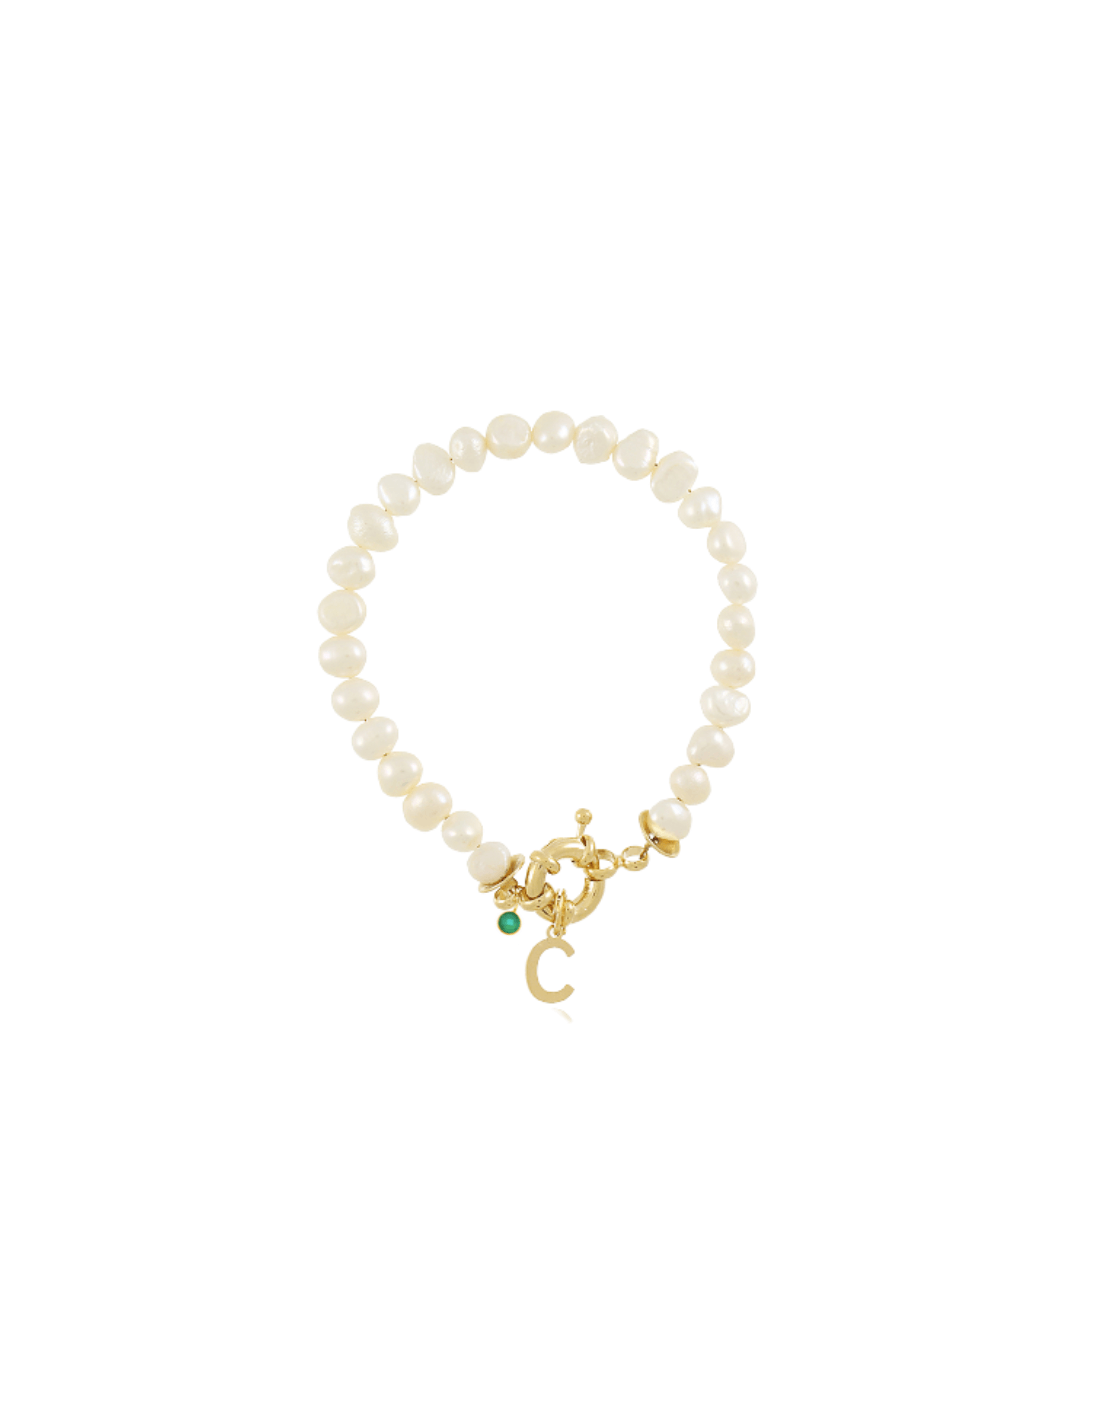 Amethyst Bracelet with Hanging Buddha Head Charm 8 mm Round Beads Bracelet